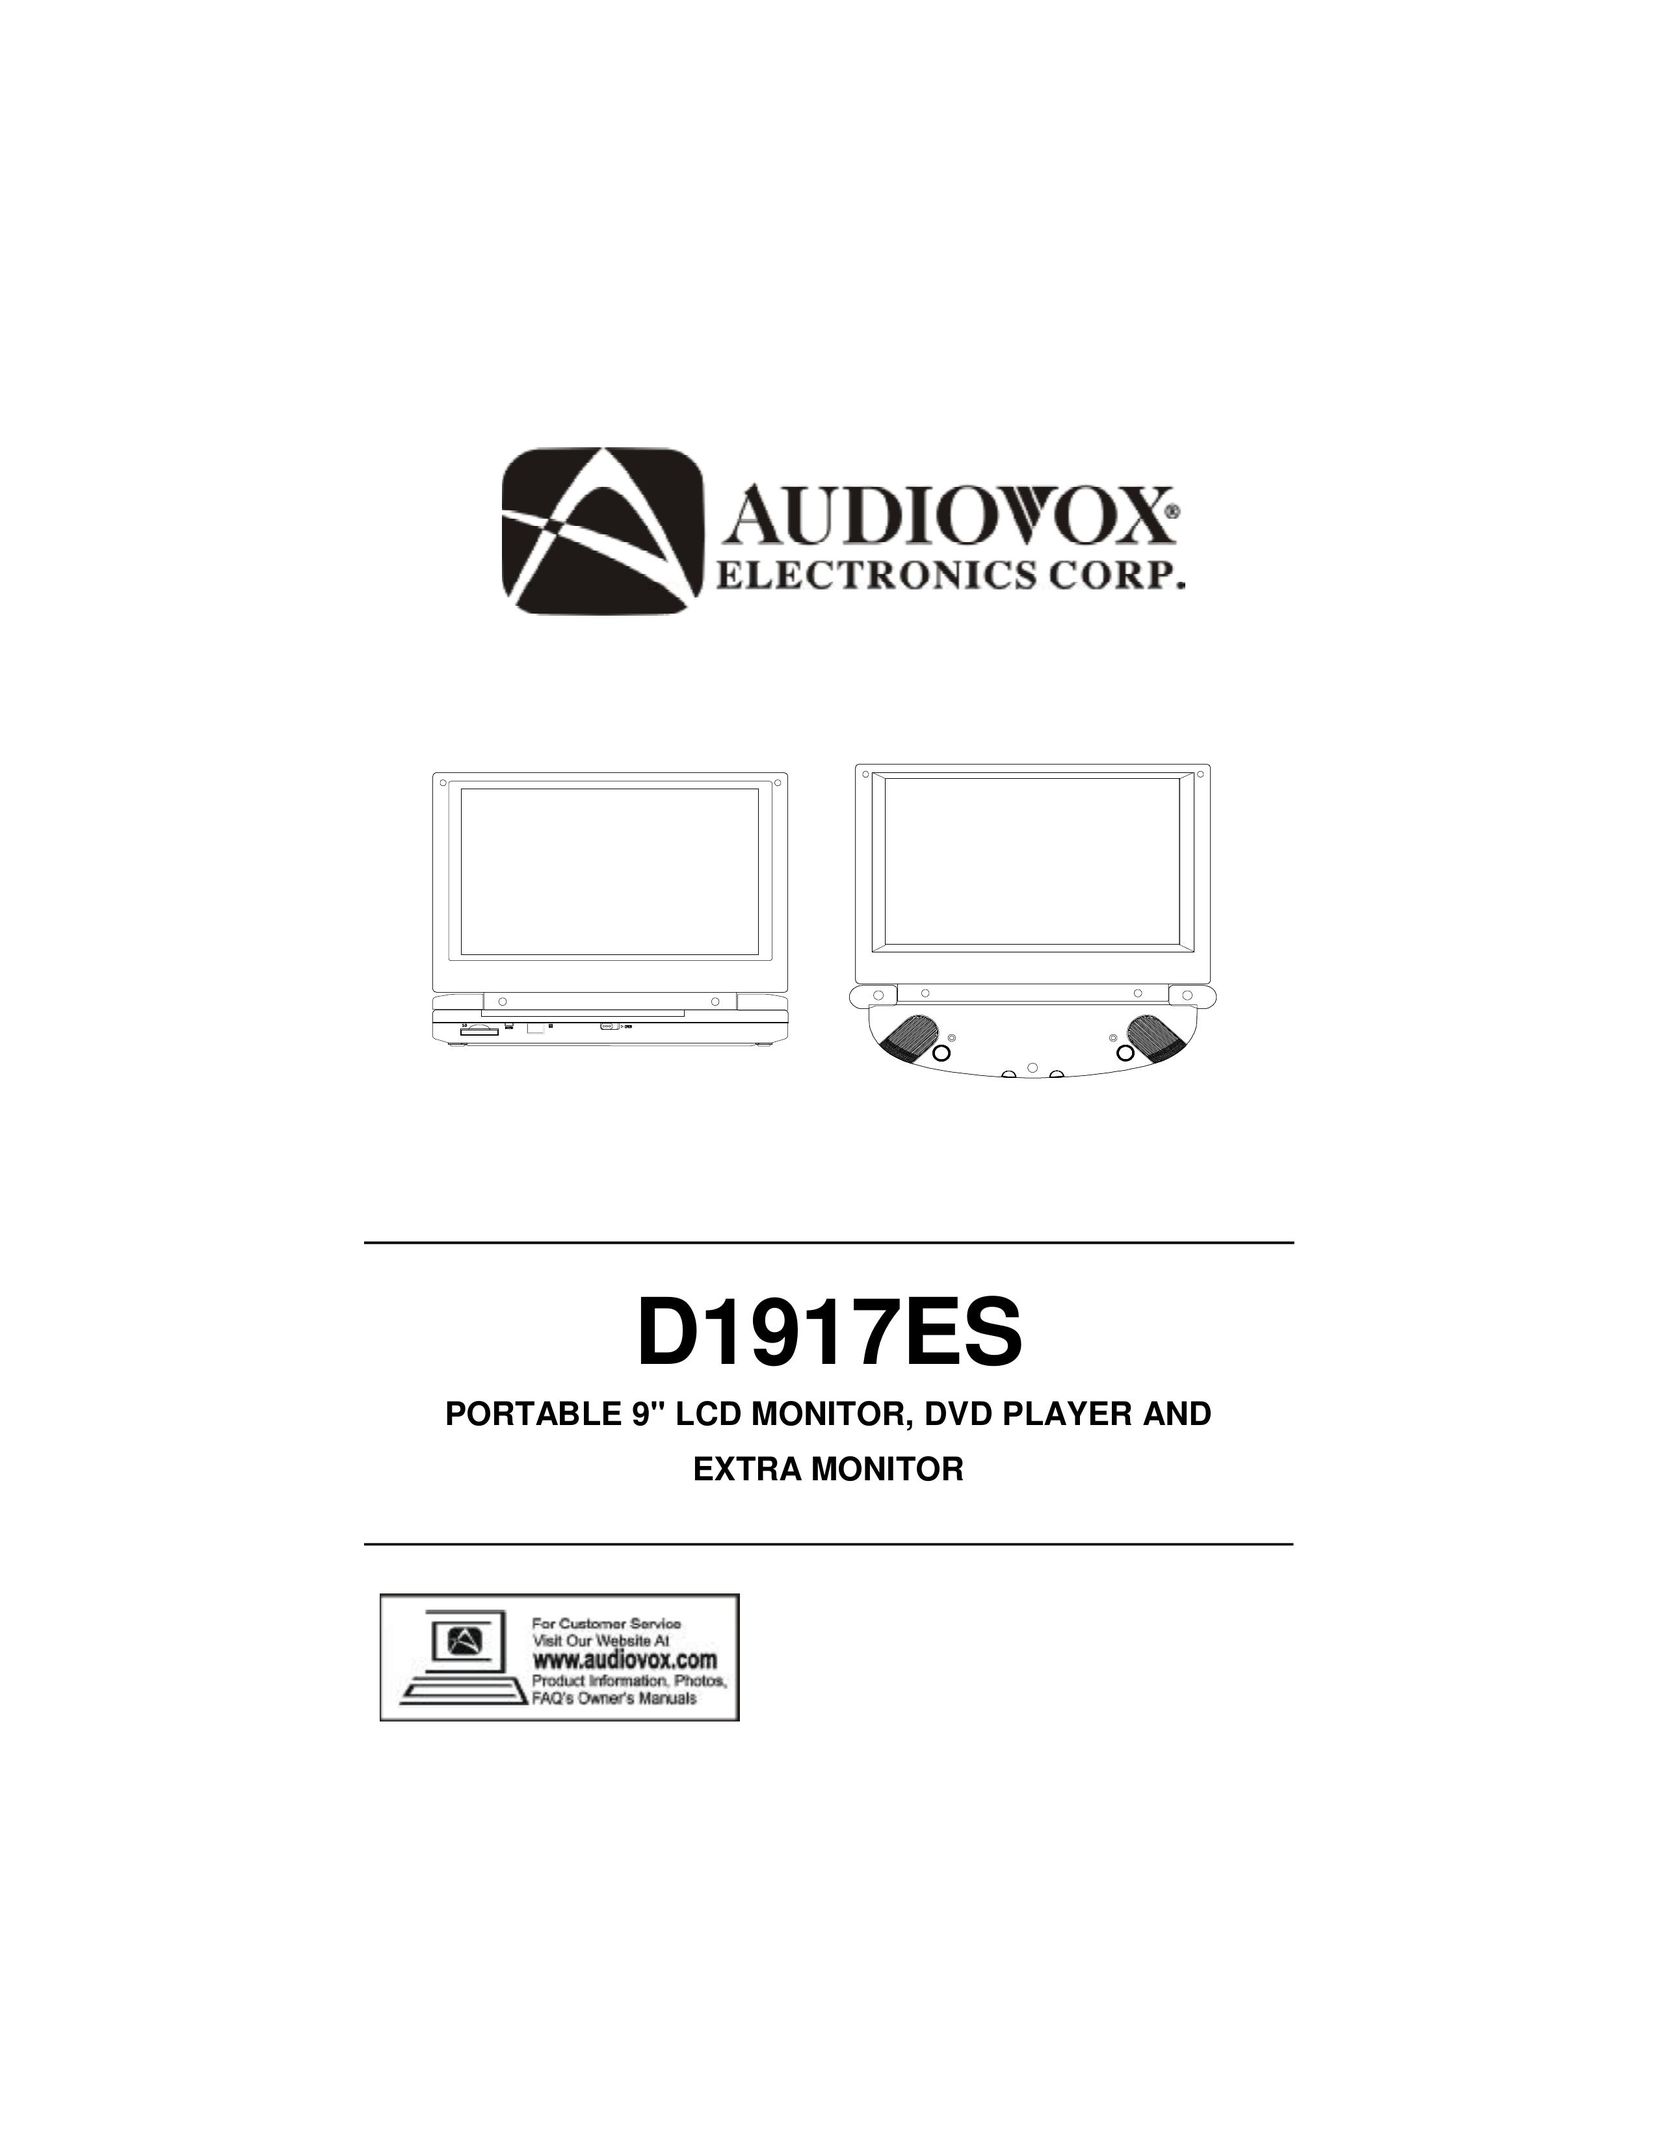 Audiovox D1917ES Portable DVD Player User Manual